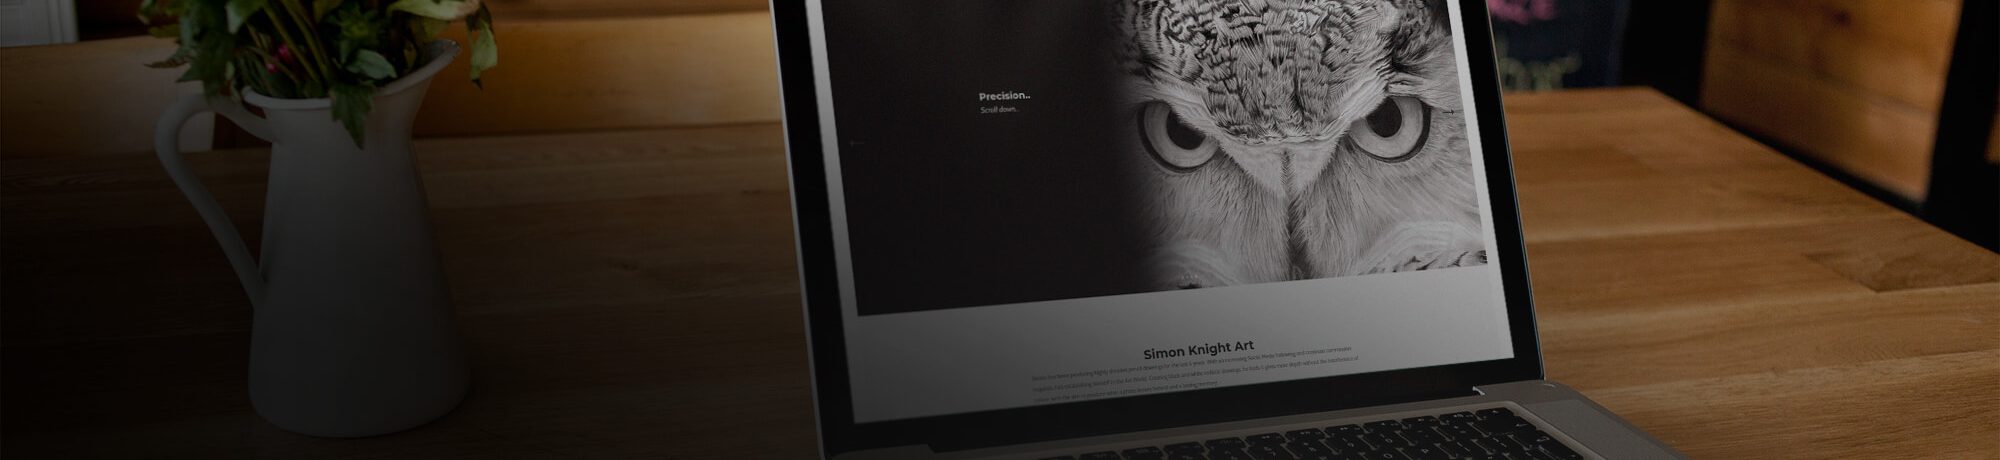 simon knght art website main 2000x460 - Simon Knight Art